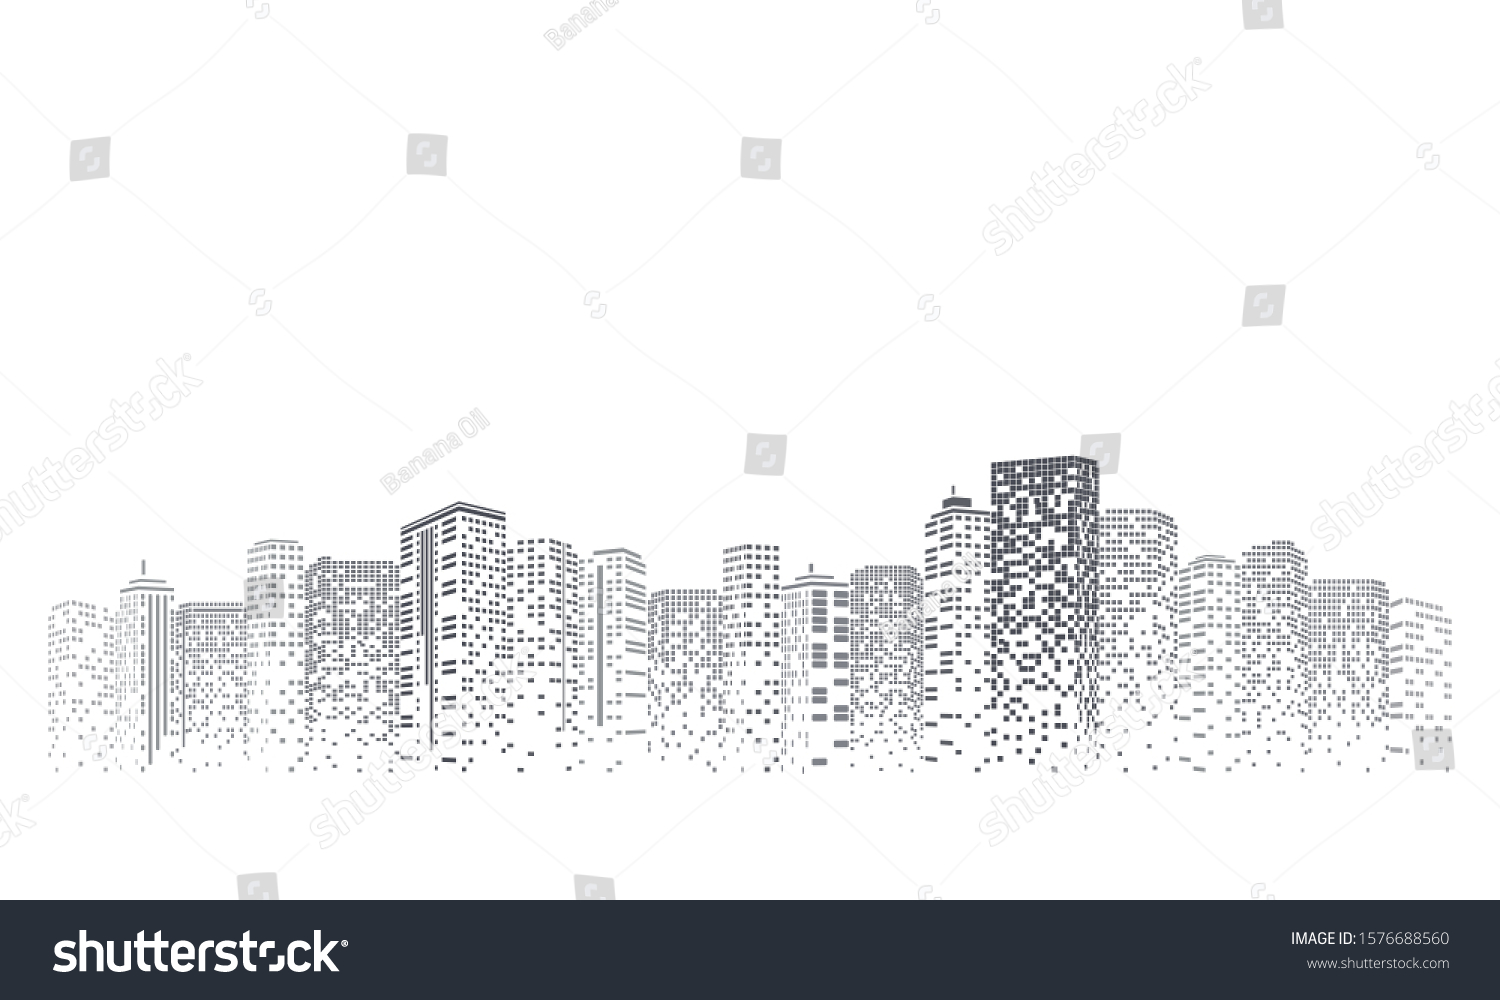 Digital building city Illustration at night, City scene on night time. #1576688560